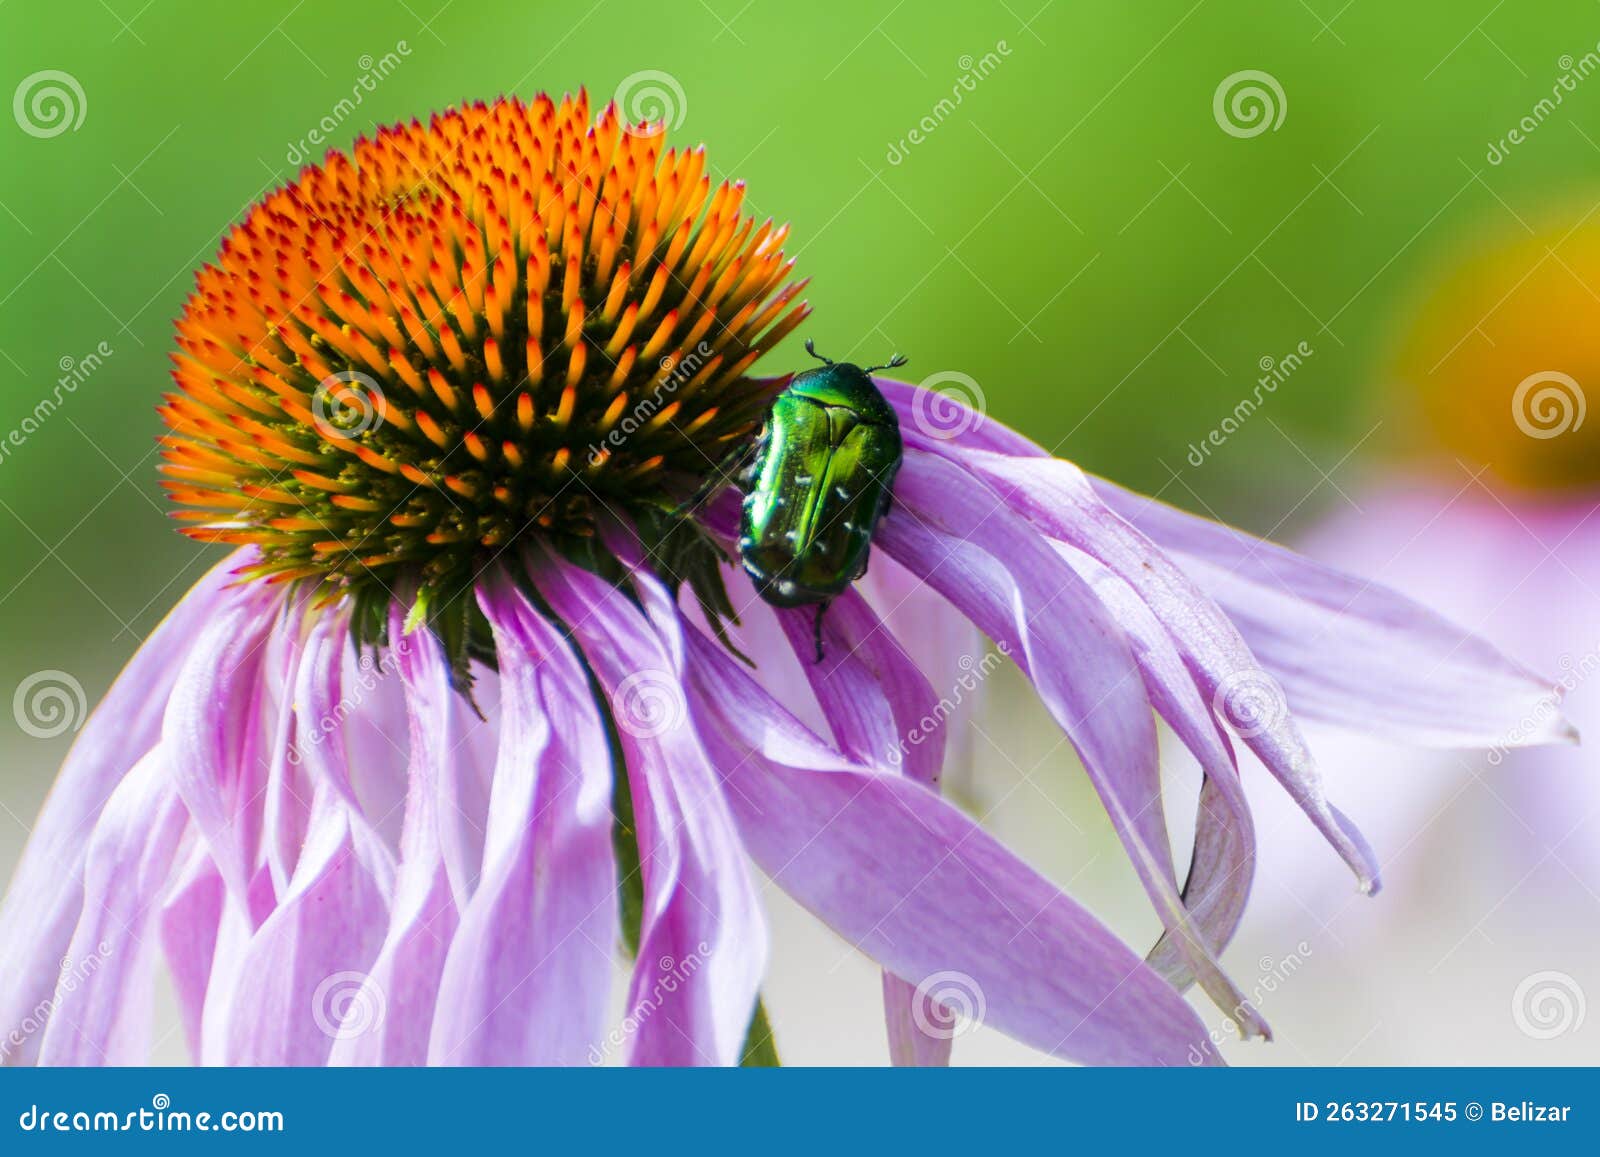 purple coneflower and european rose chafe beetle